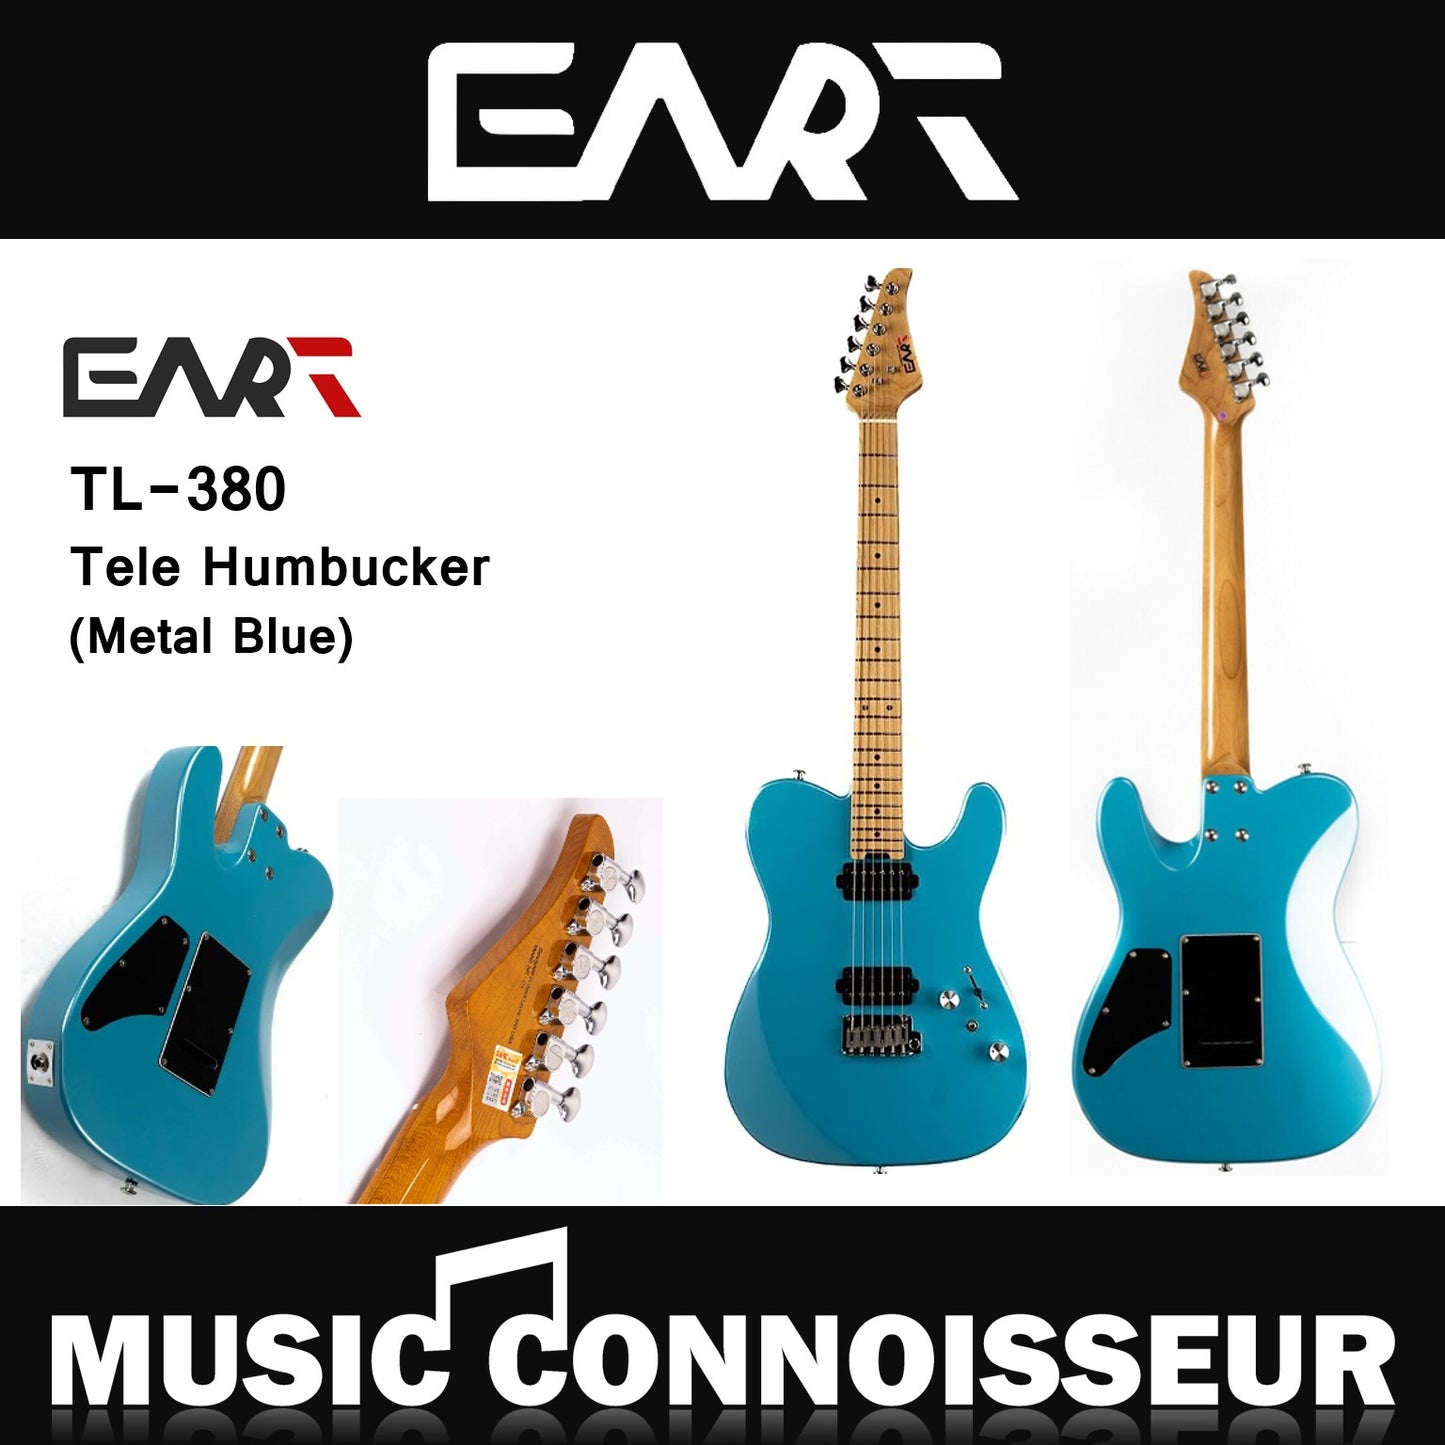 EART TL-380 Tele Humbucker Electric Guitar (Metal Blue)